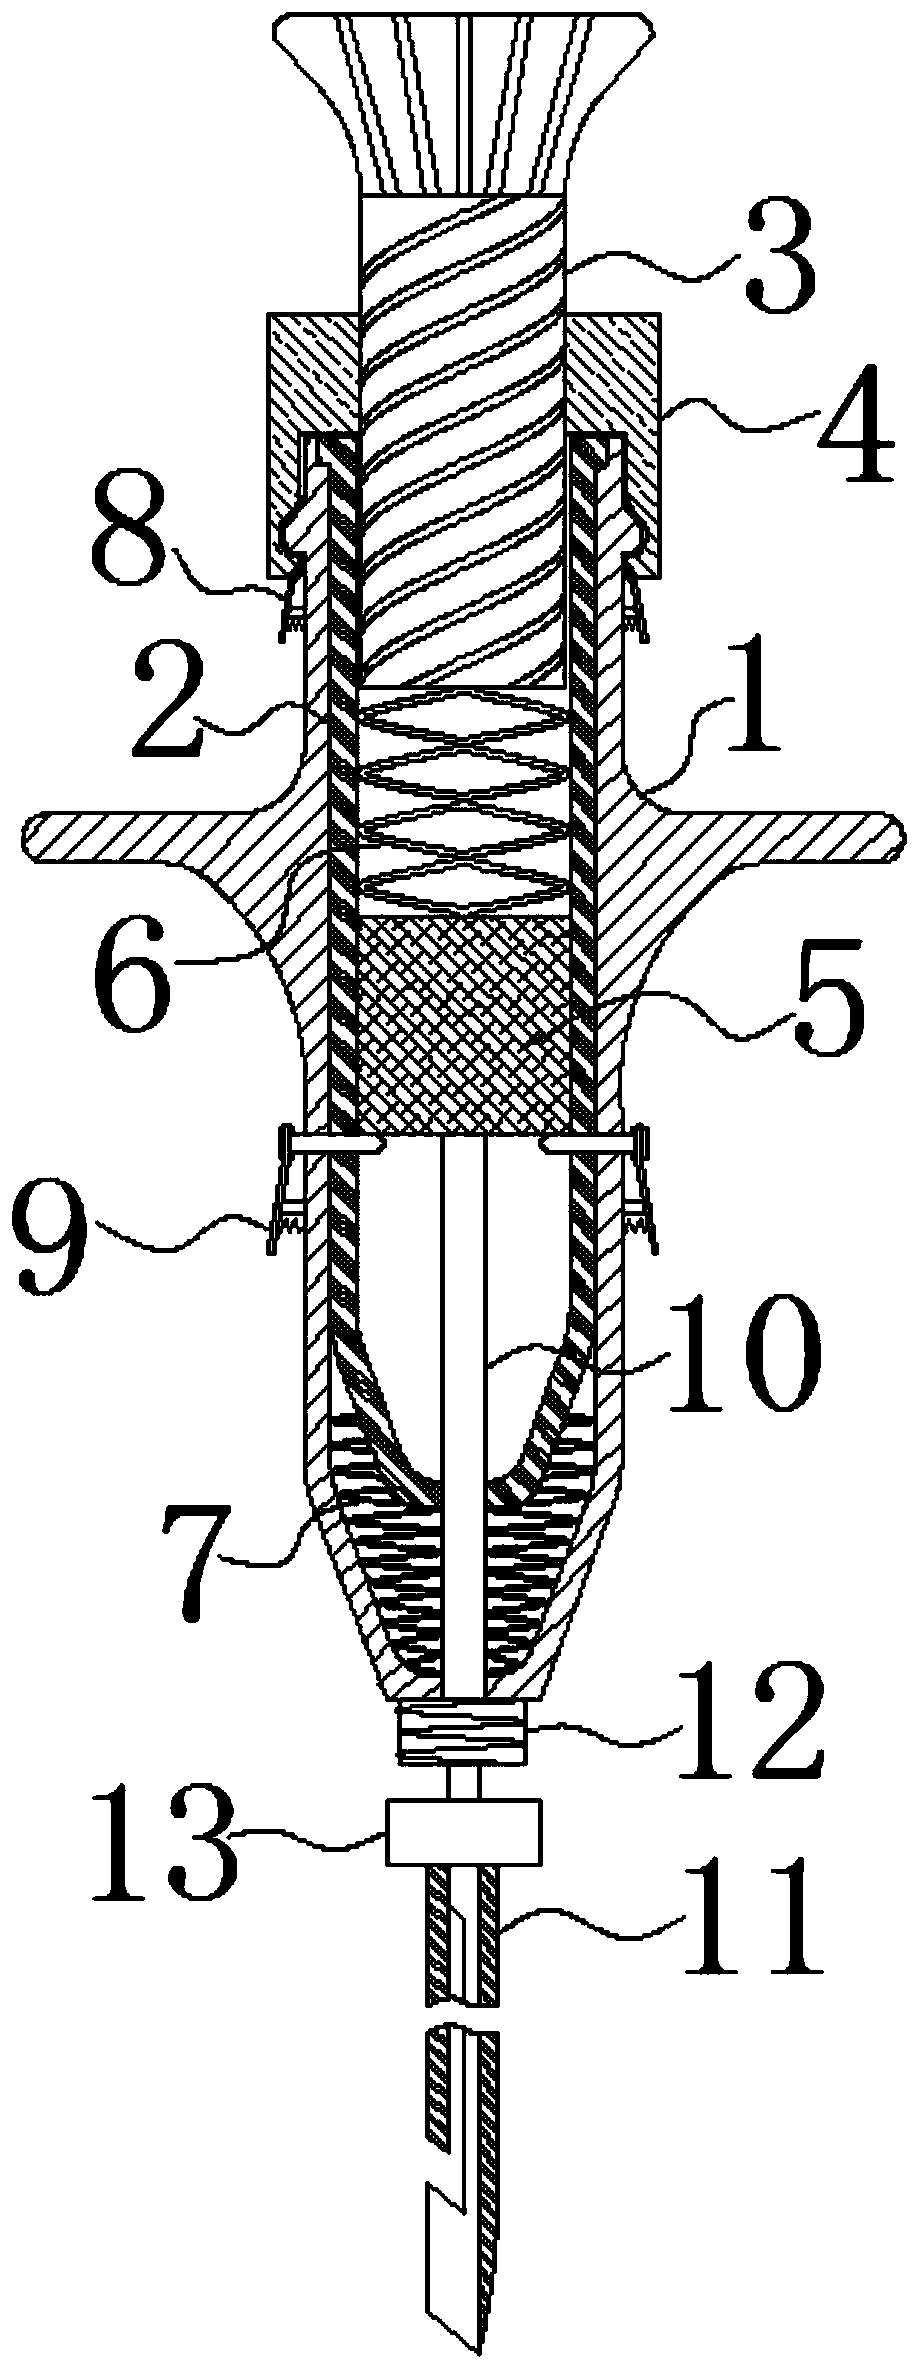 Puncture needle